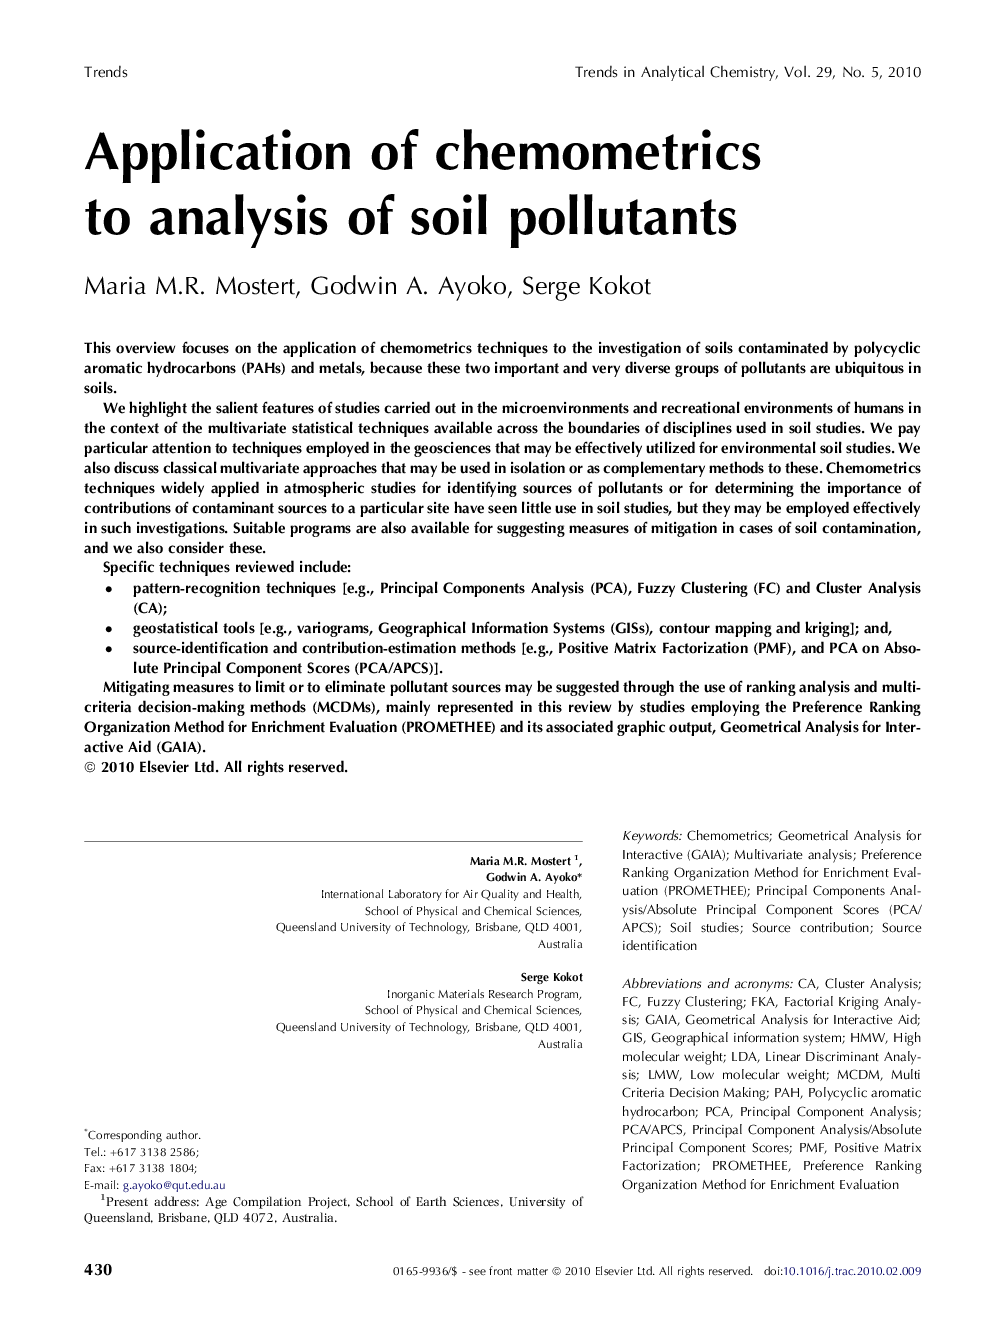 Application of chemometrics to analysis of soil pollutants